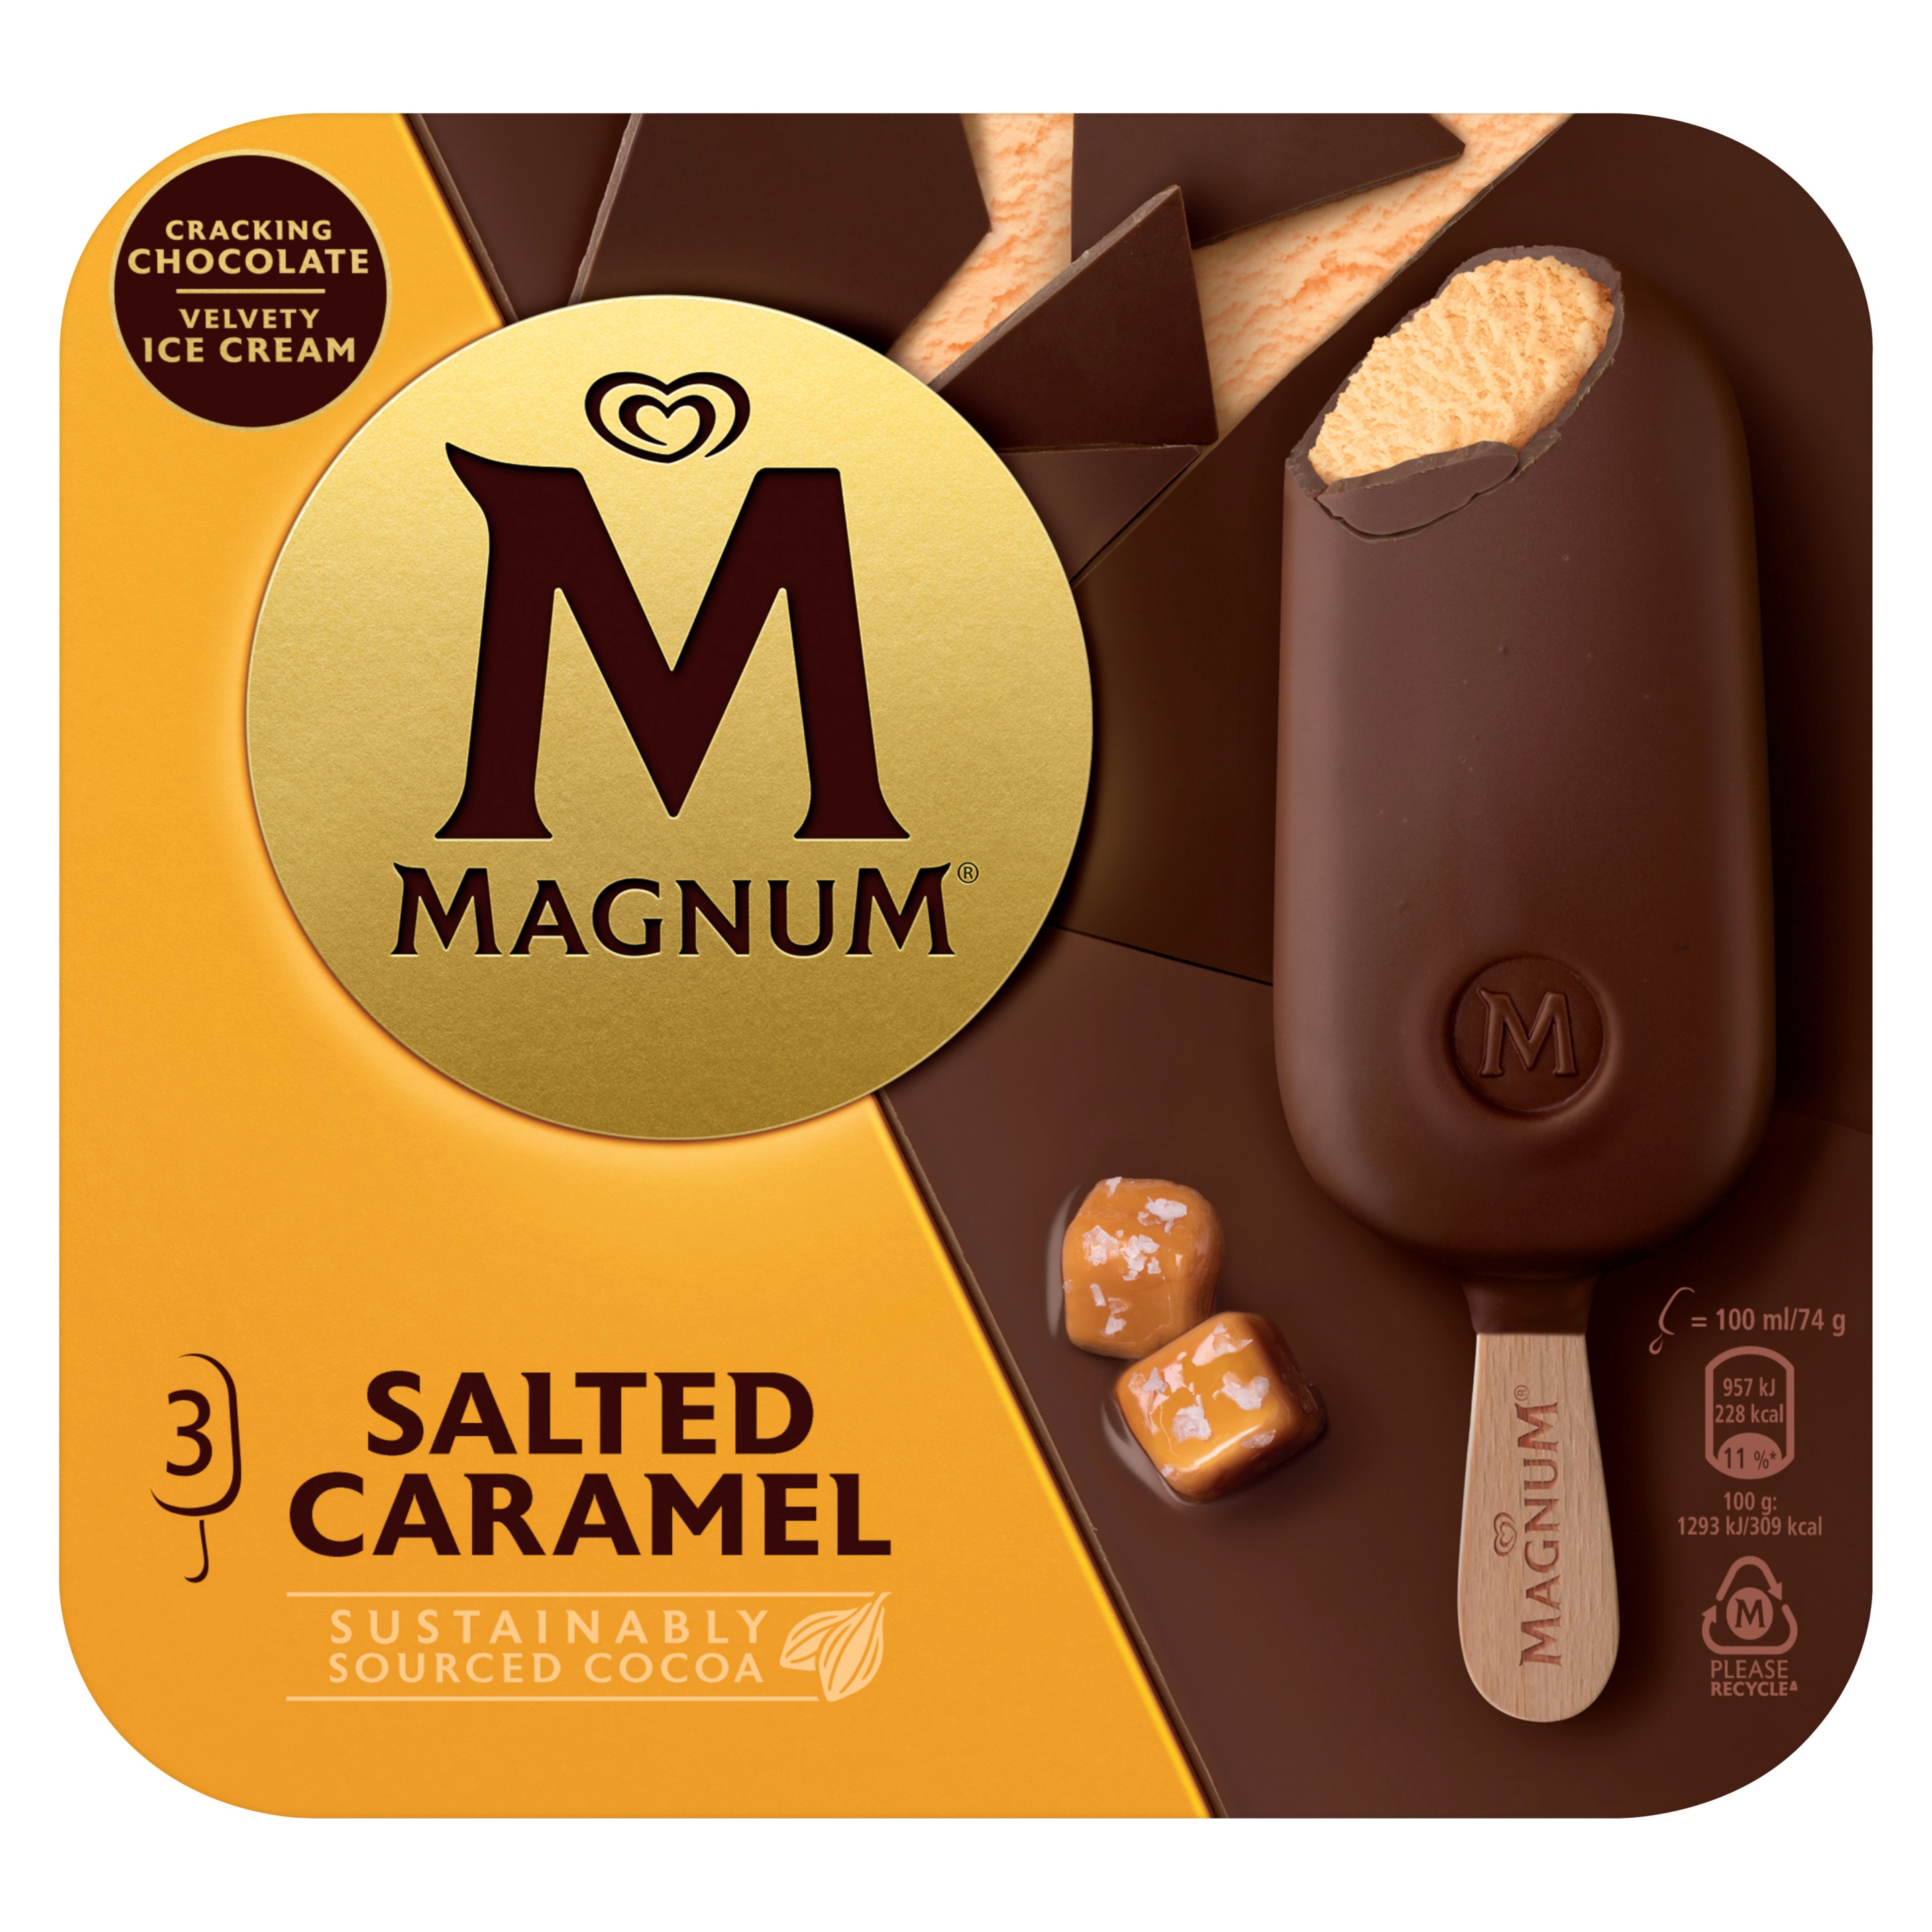 Magnum salted caramel